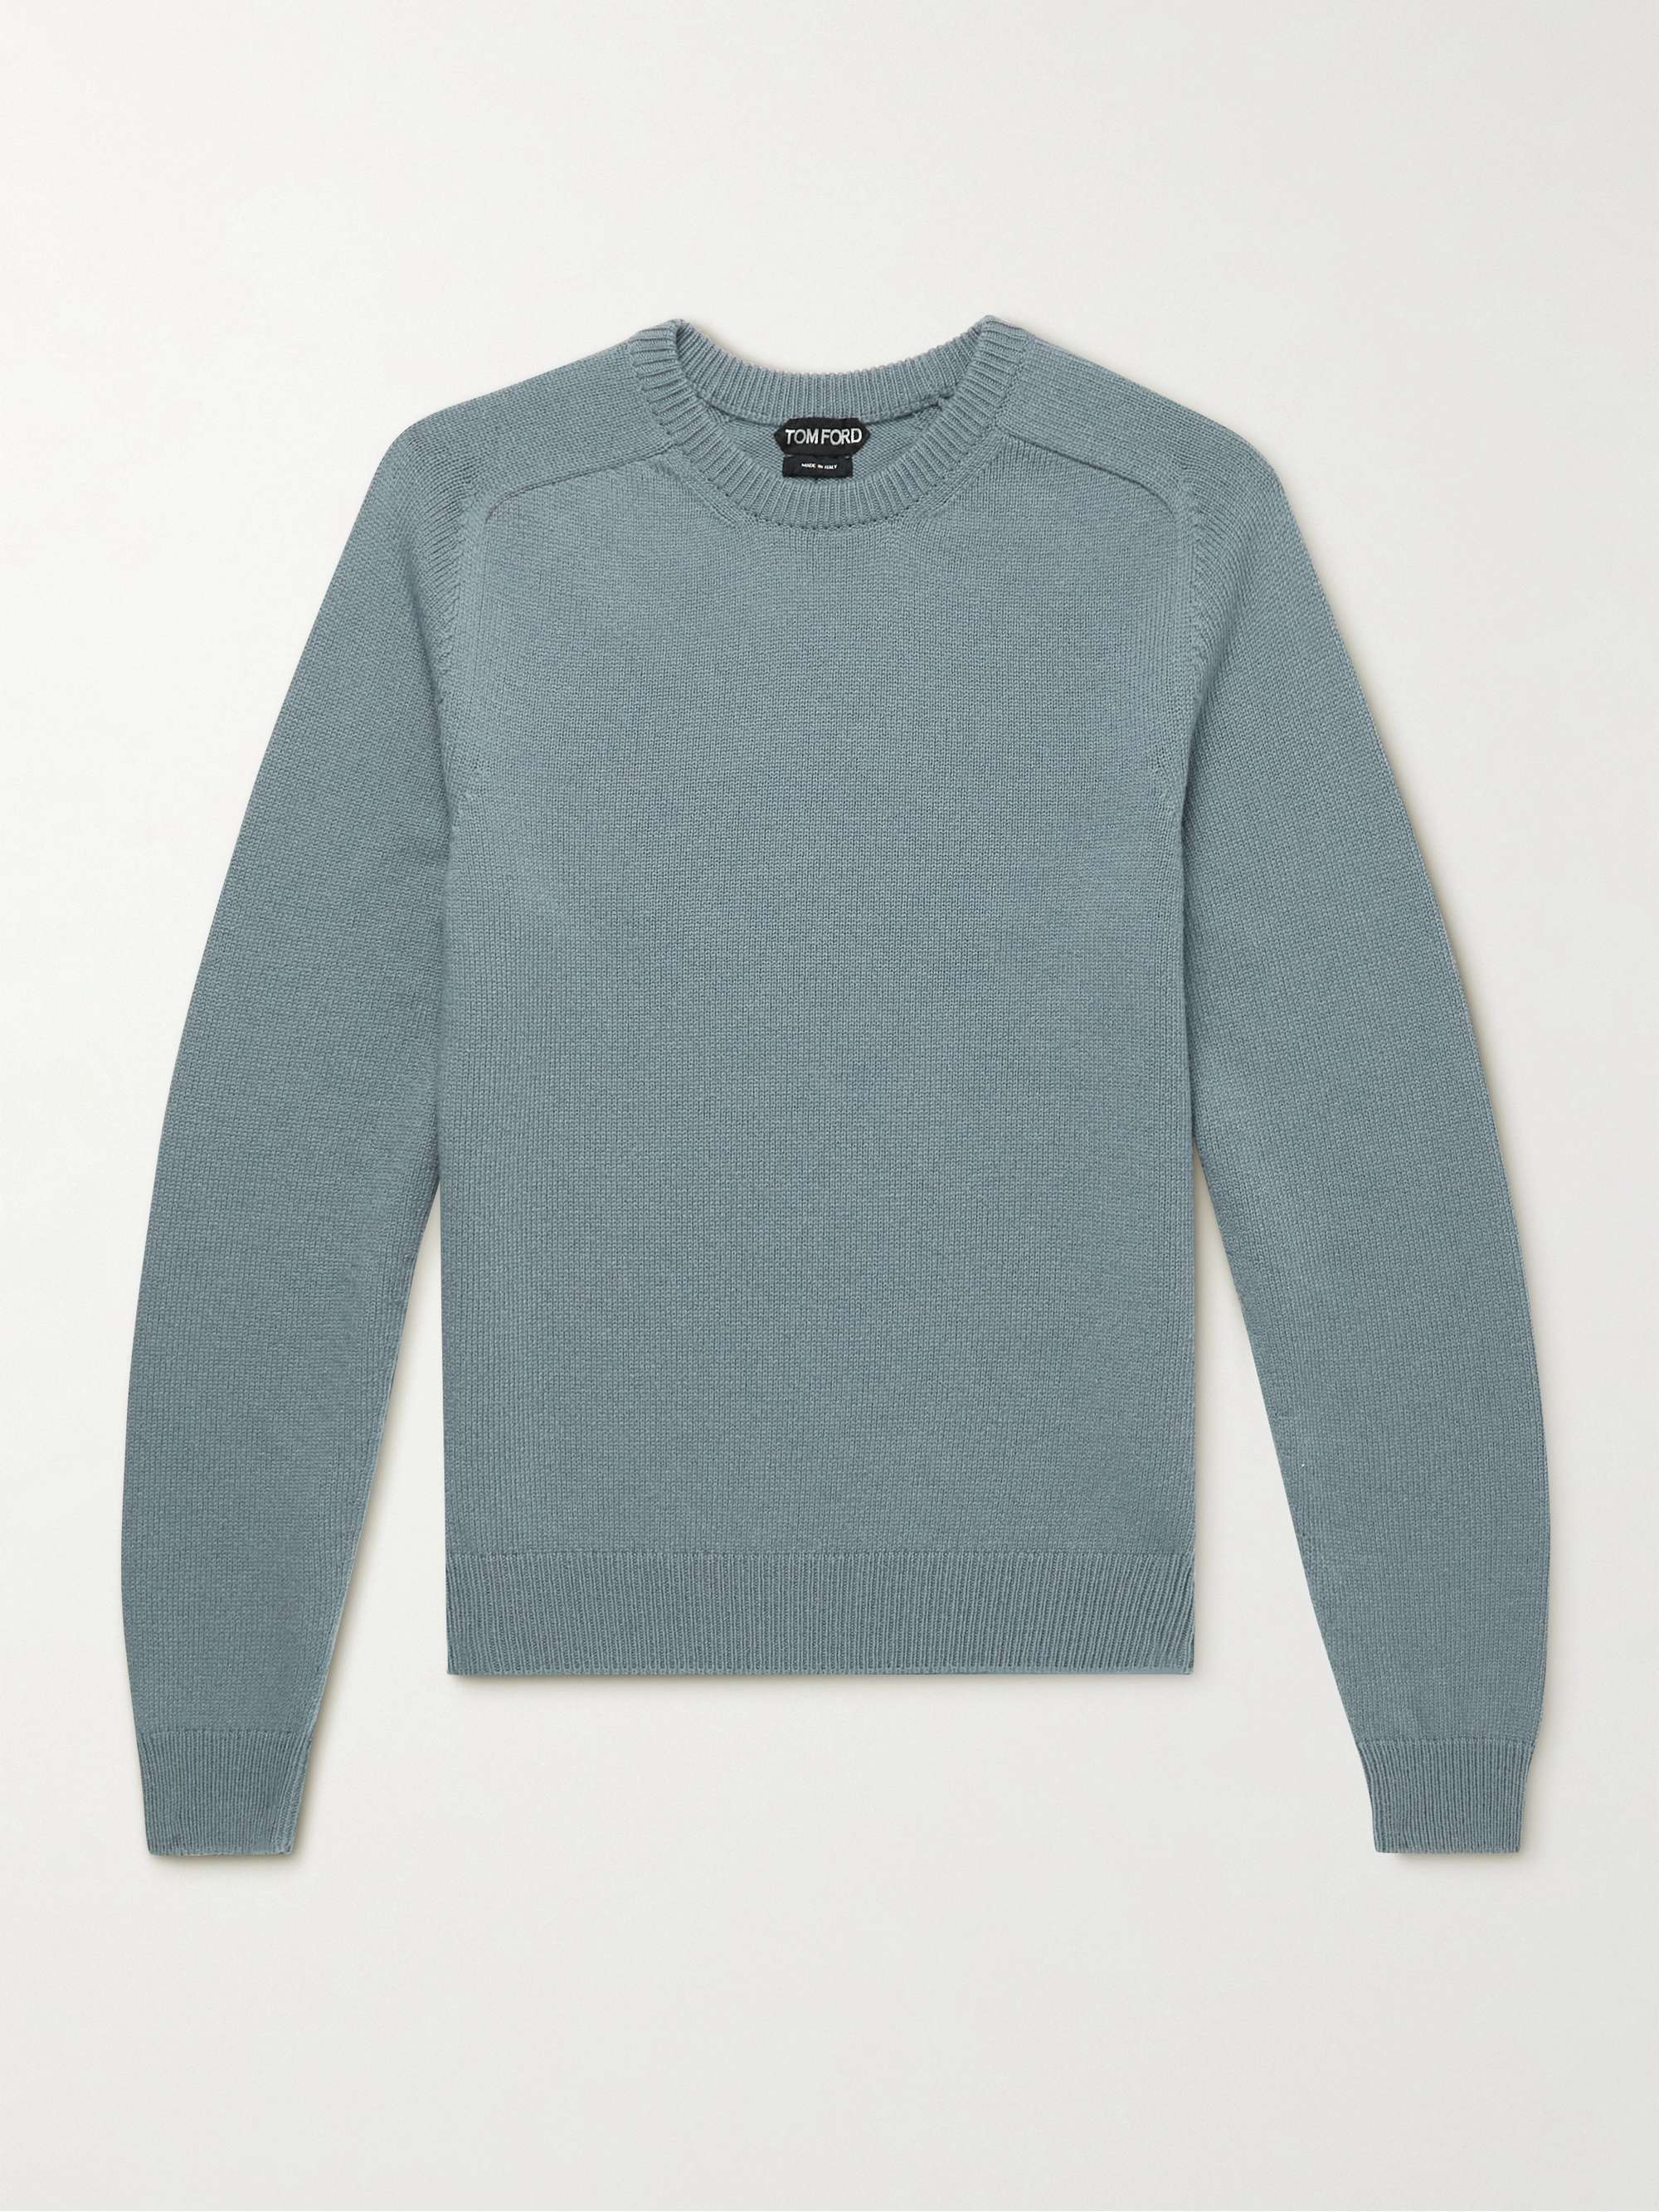 TOM FORD Cashmere Sweater | MR PORTER